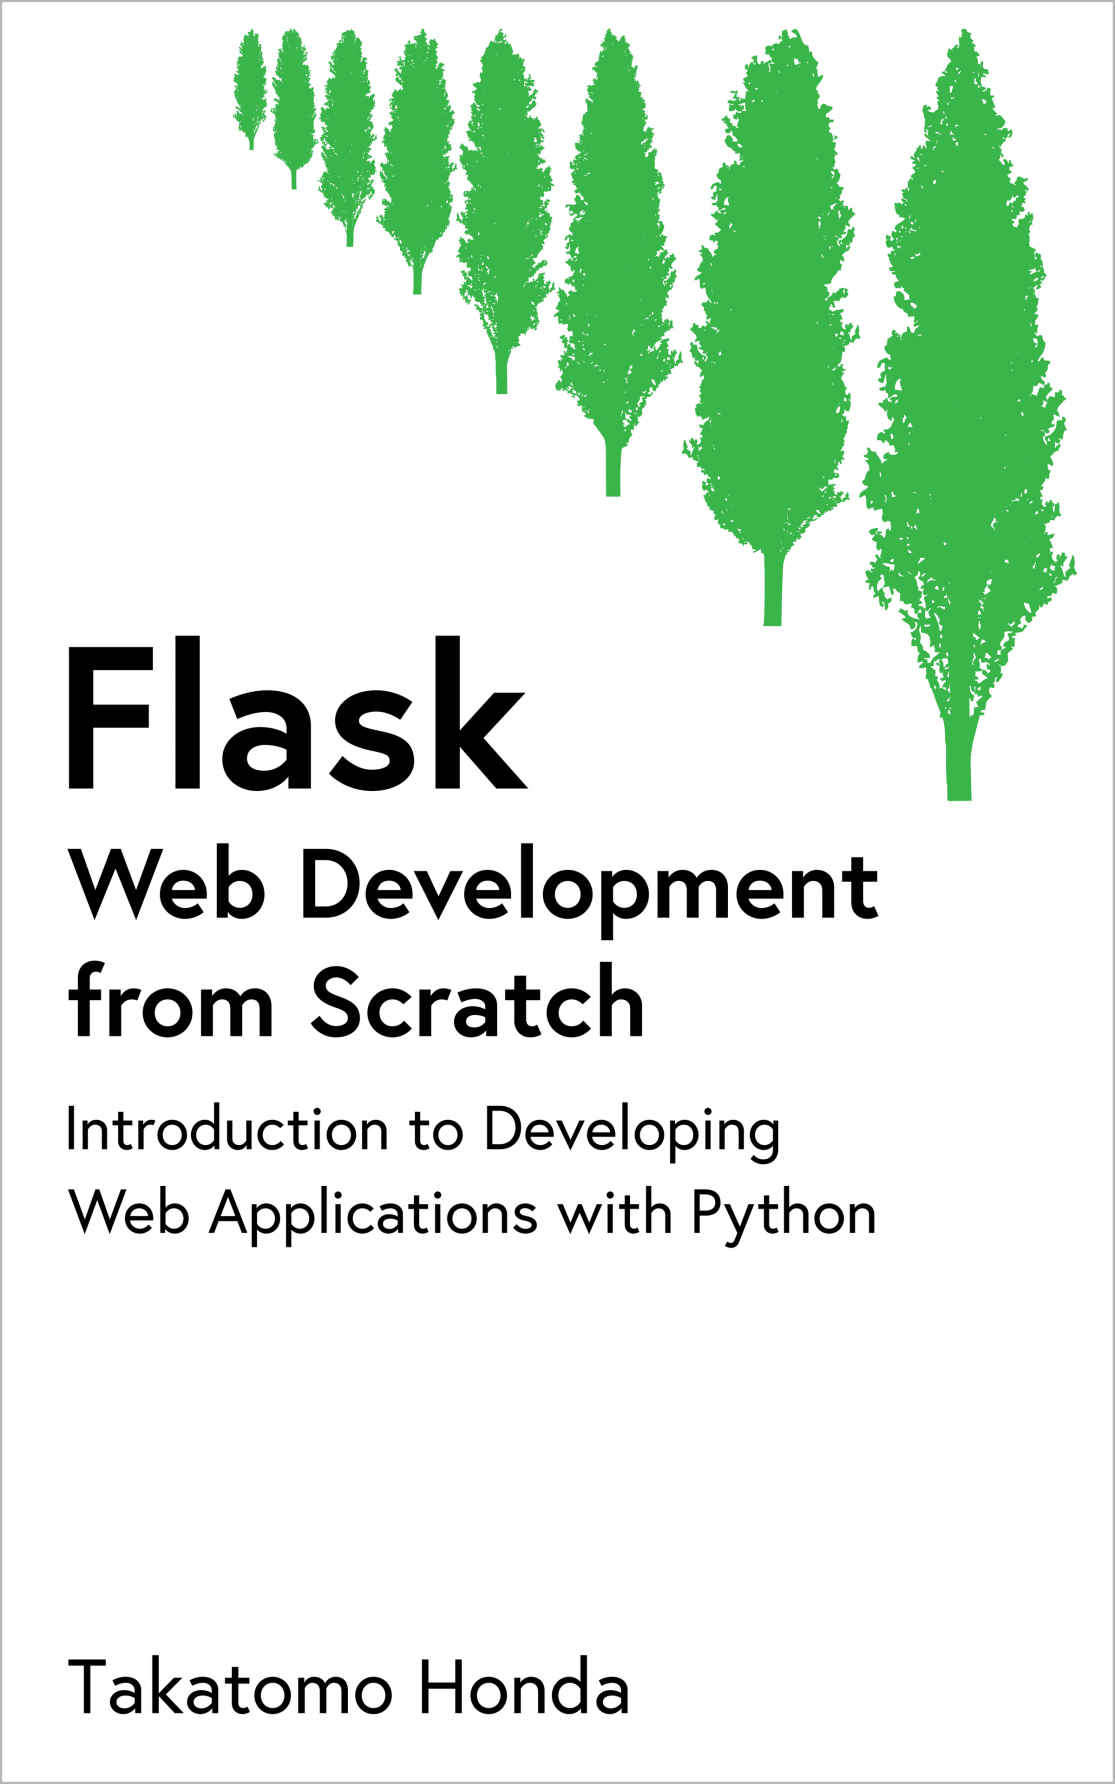 Flask Web Development from Scratch